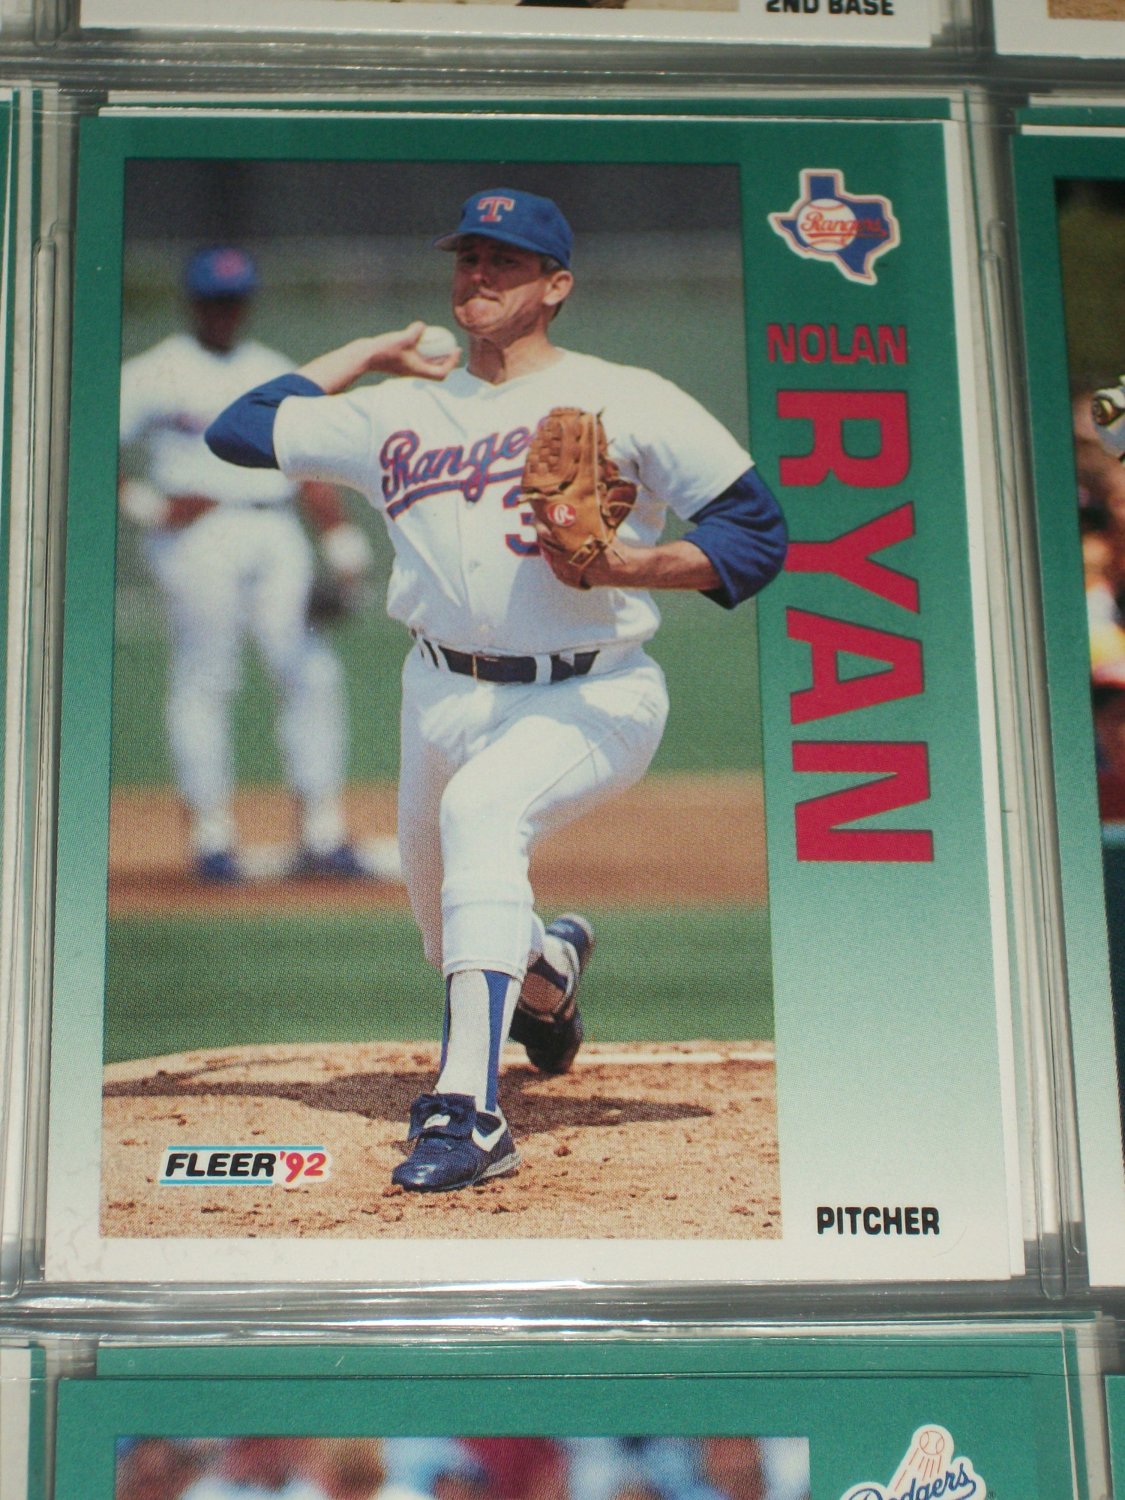 Nolan Ryan 1992 Fleer baseball card